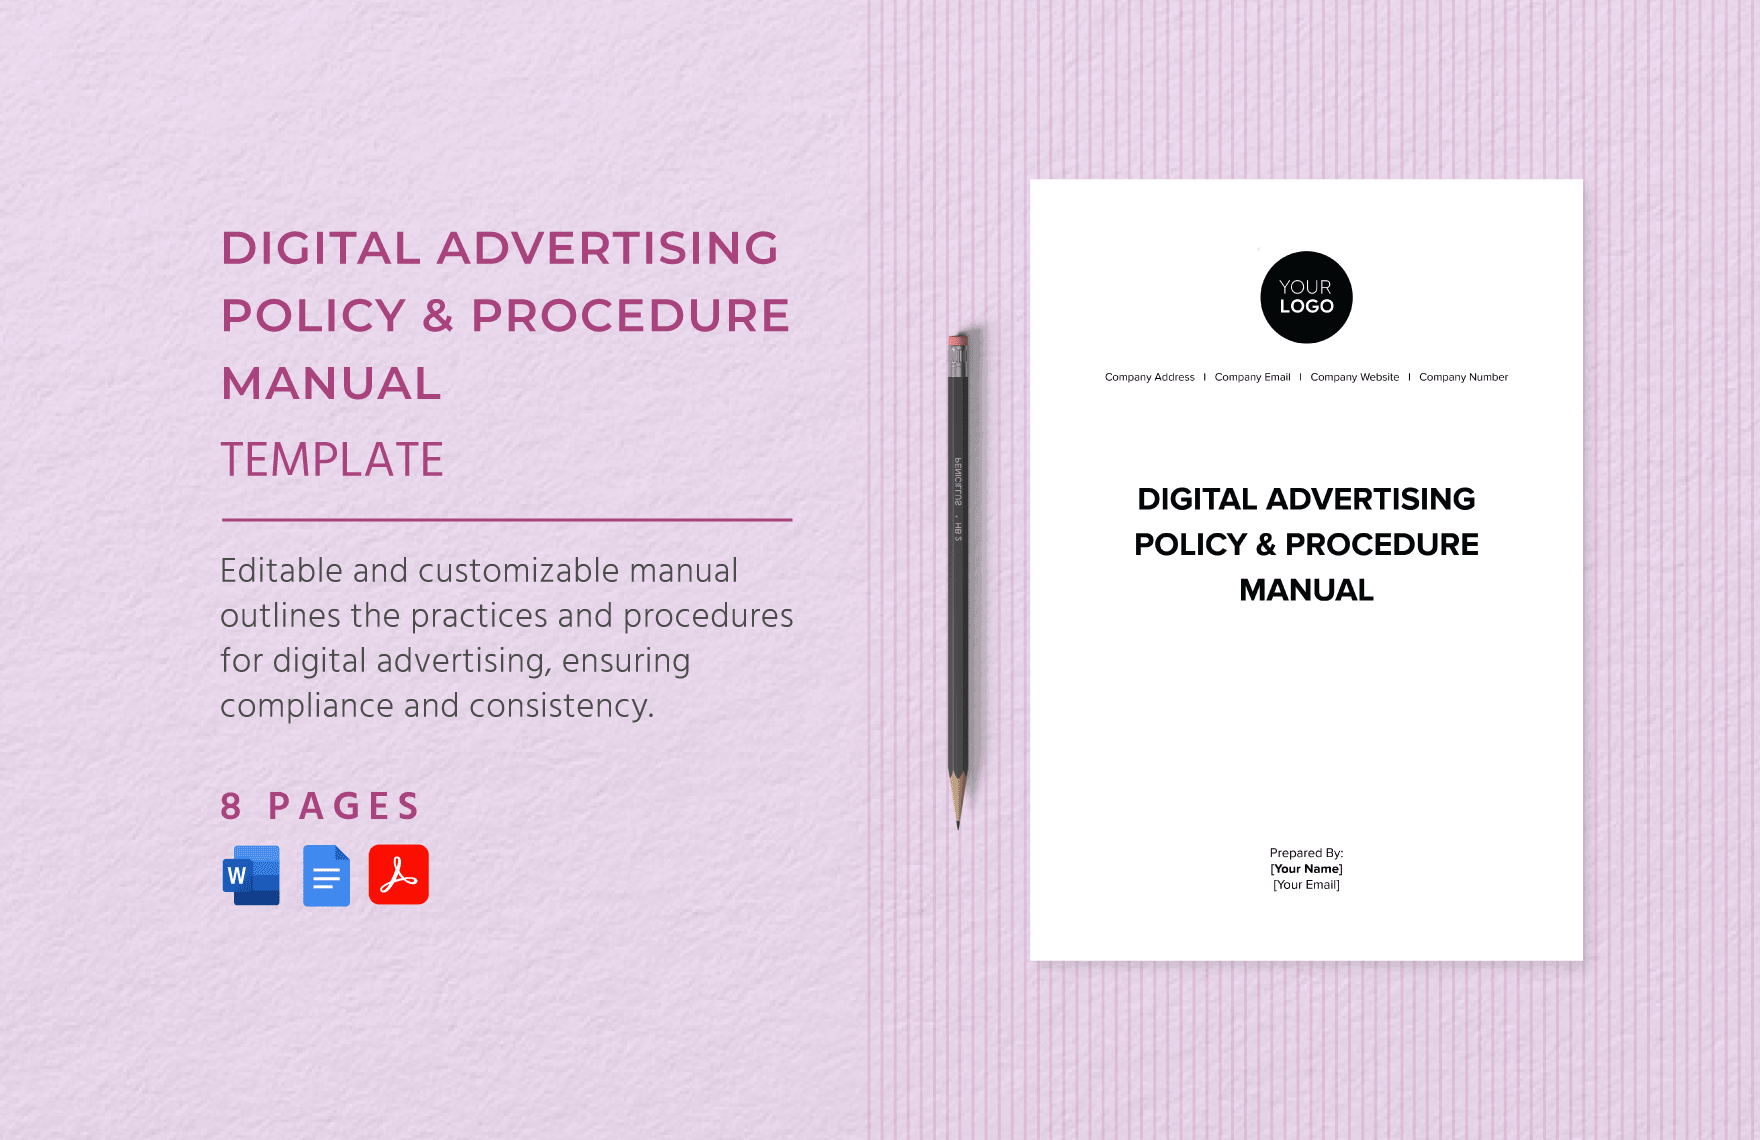 Digital Advertising Policy & Procedure Manual Template in Word, Google Docs, PDF